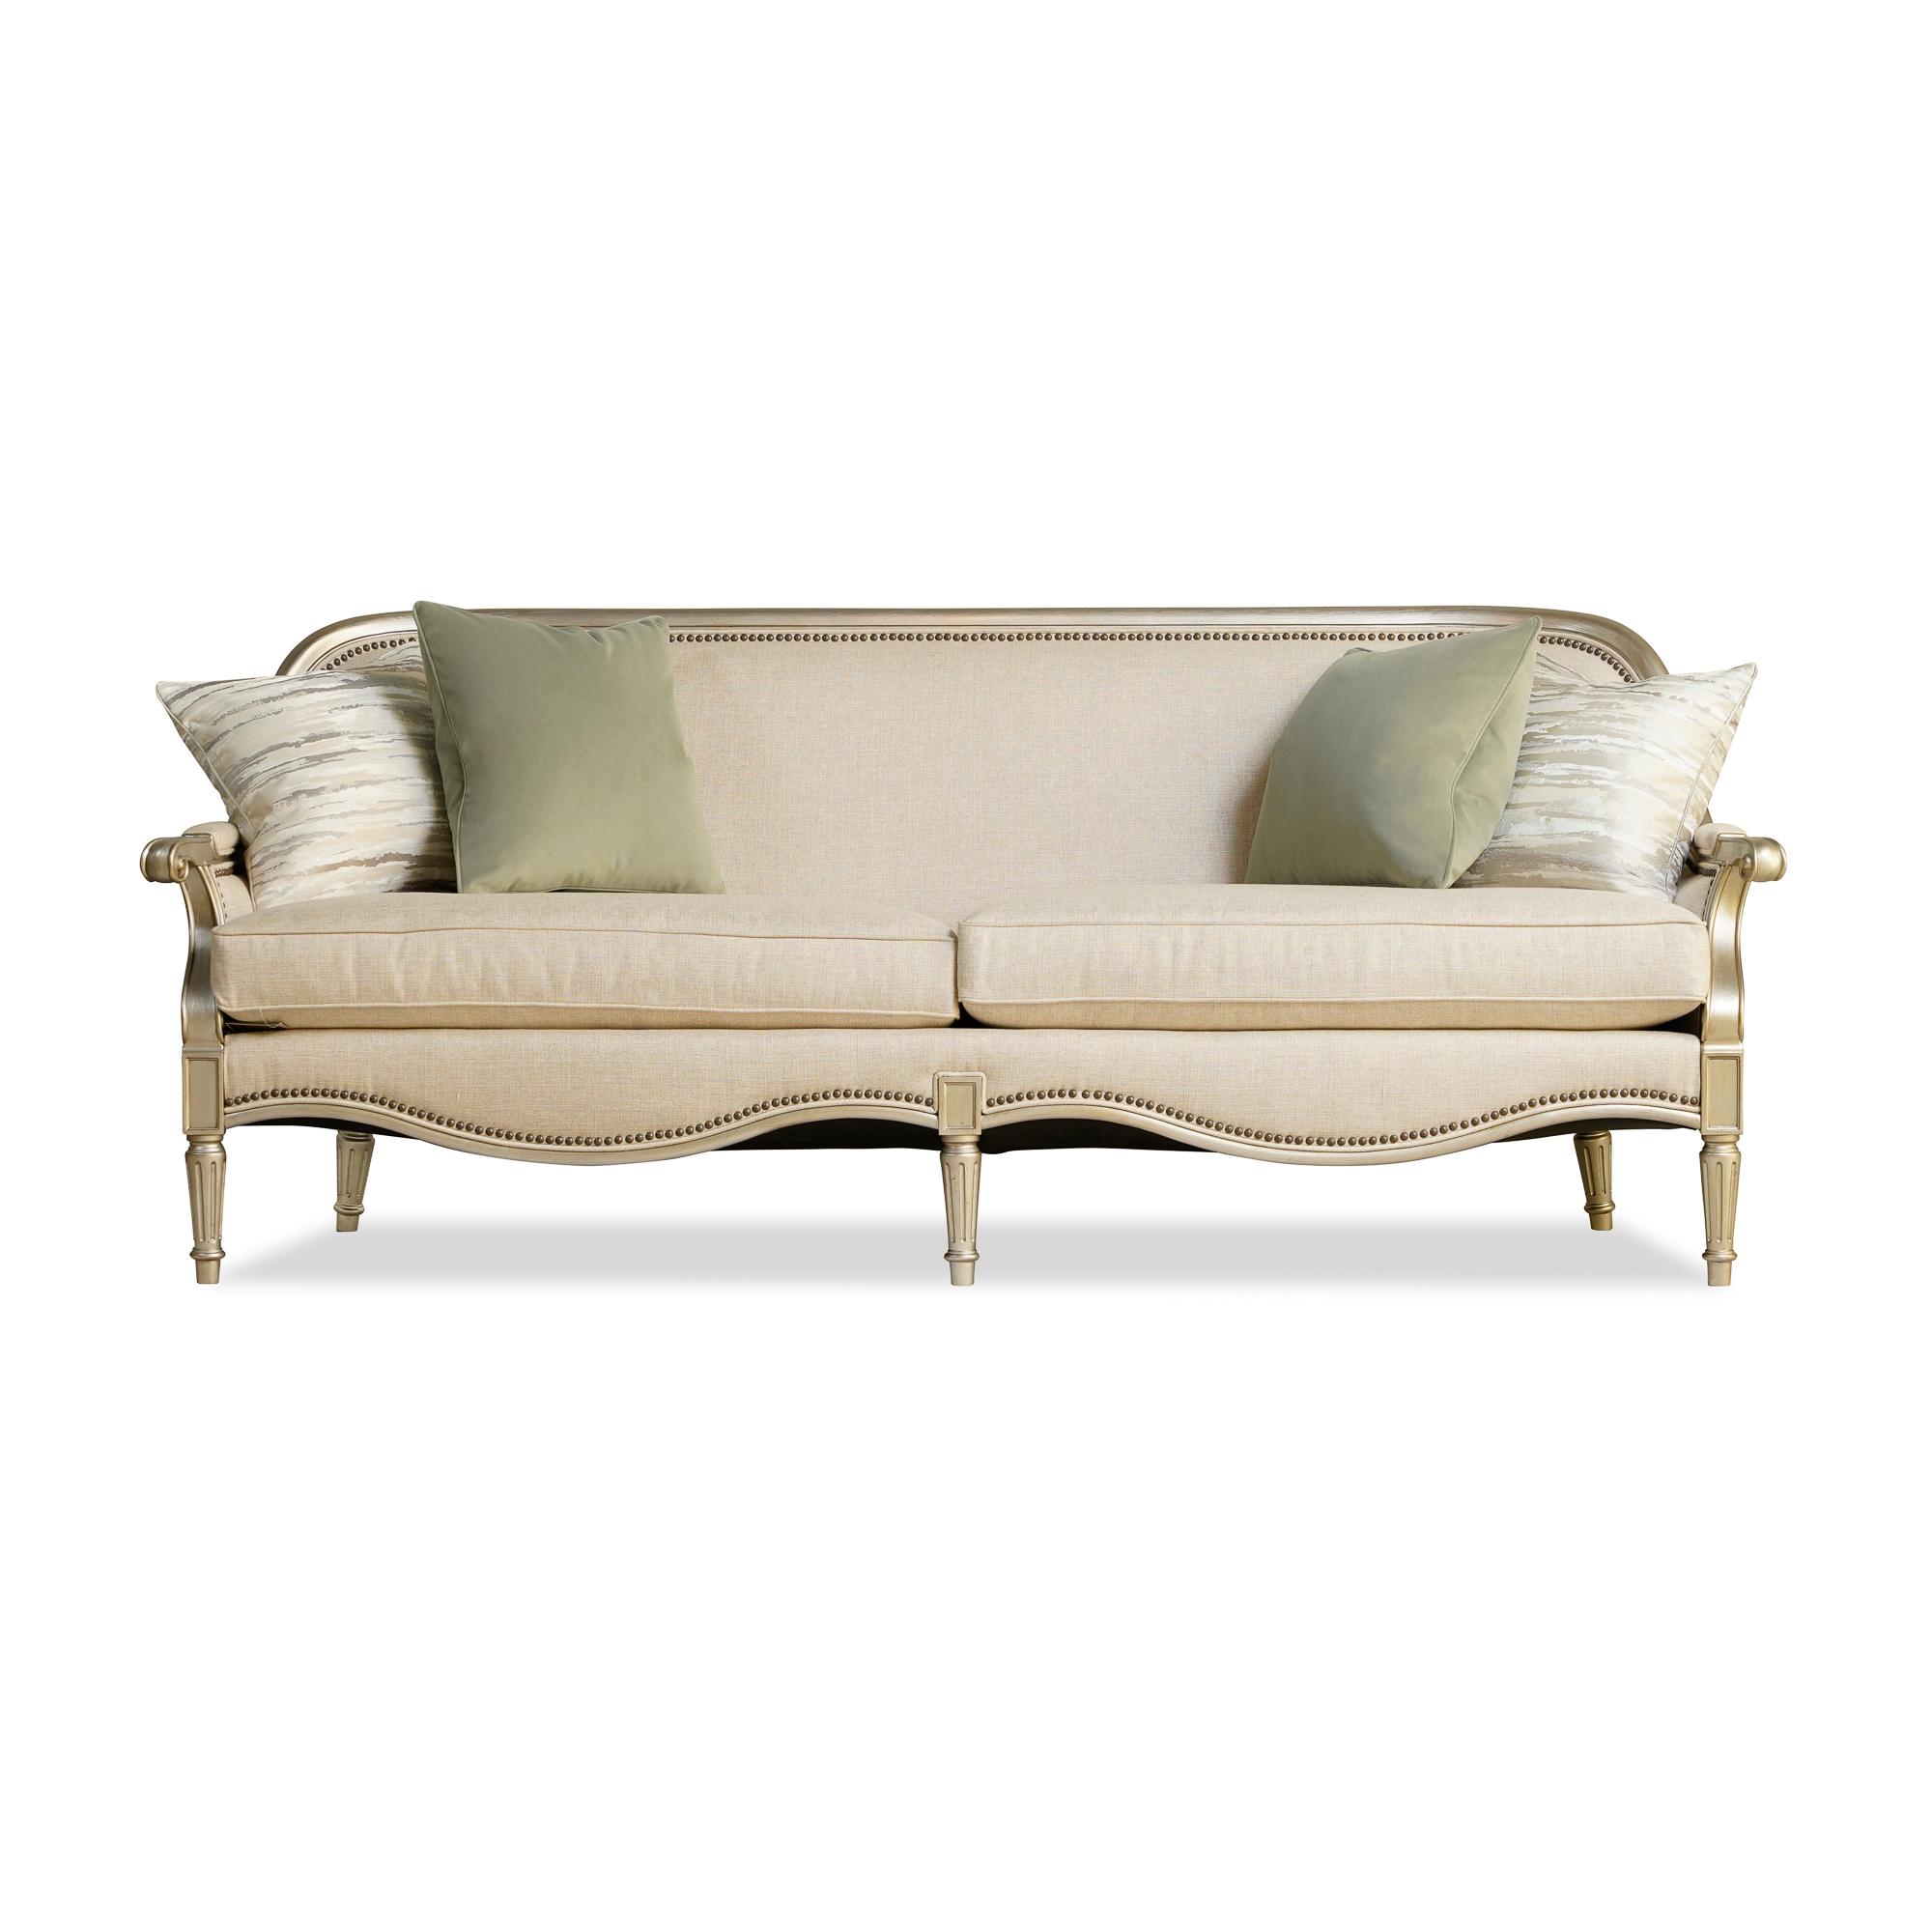 Contemporary, Modern Sofa Charlotte Emerald 176541-5227AA in Beige Fabric